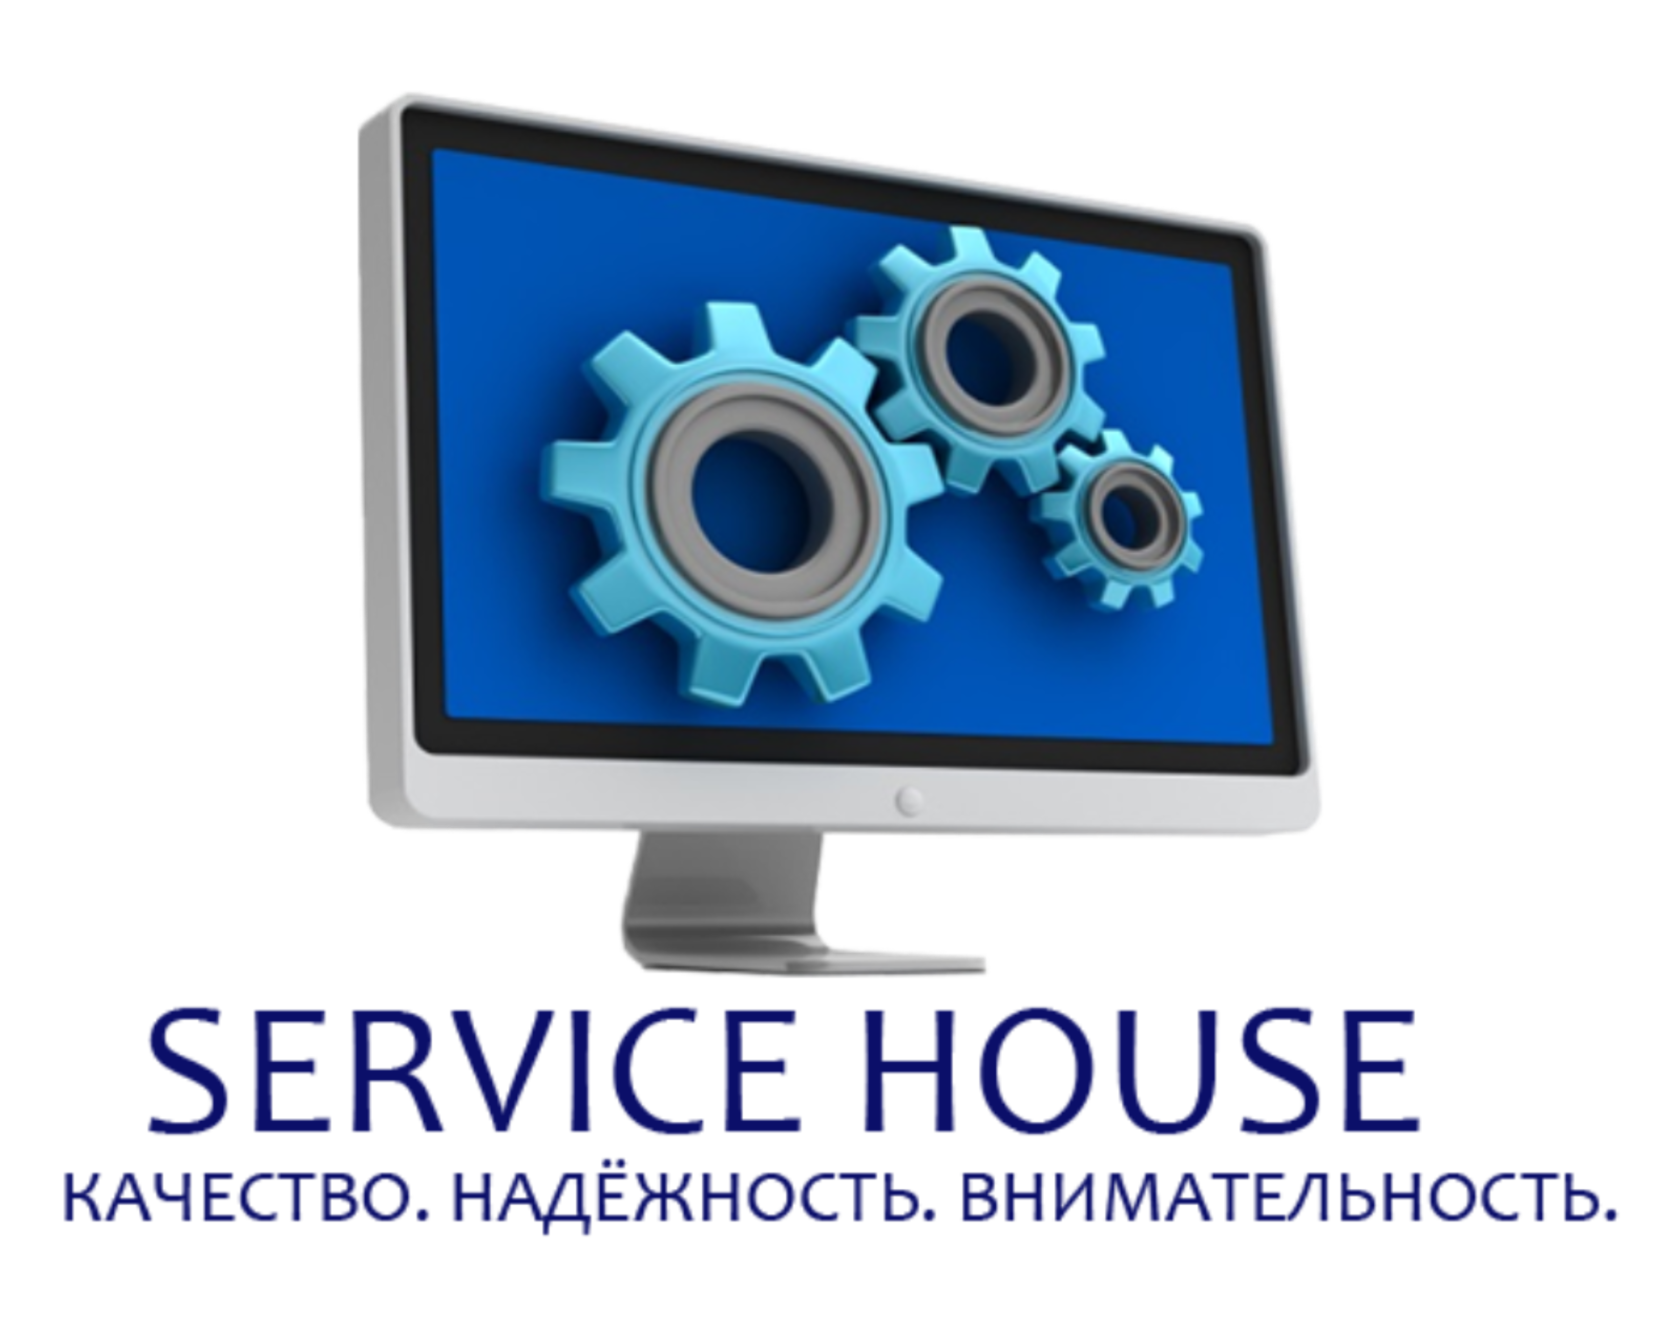 Сервисный центр "Service house"